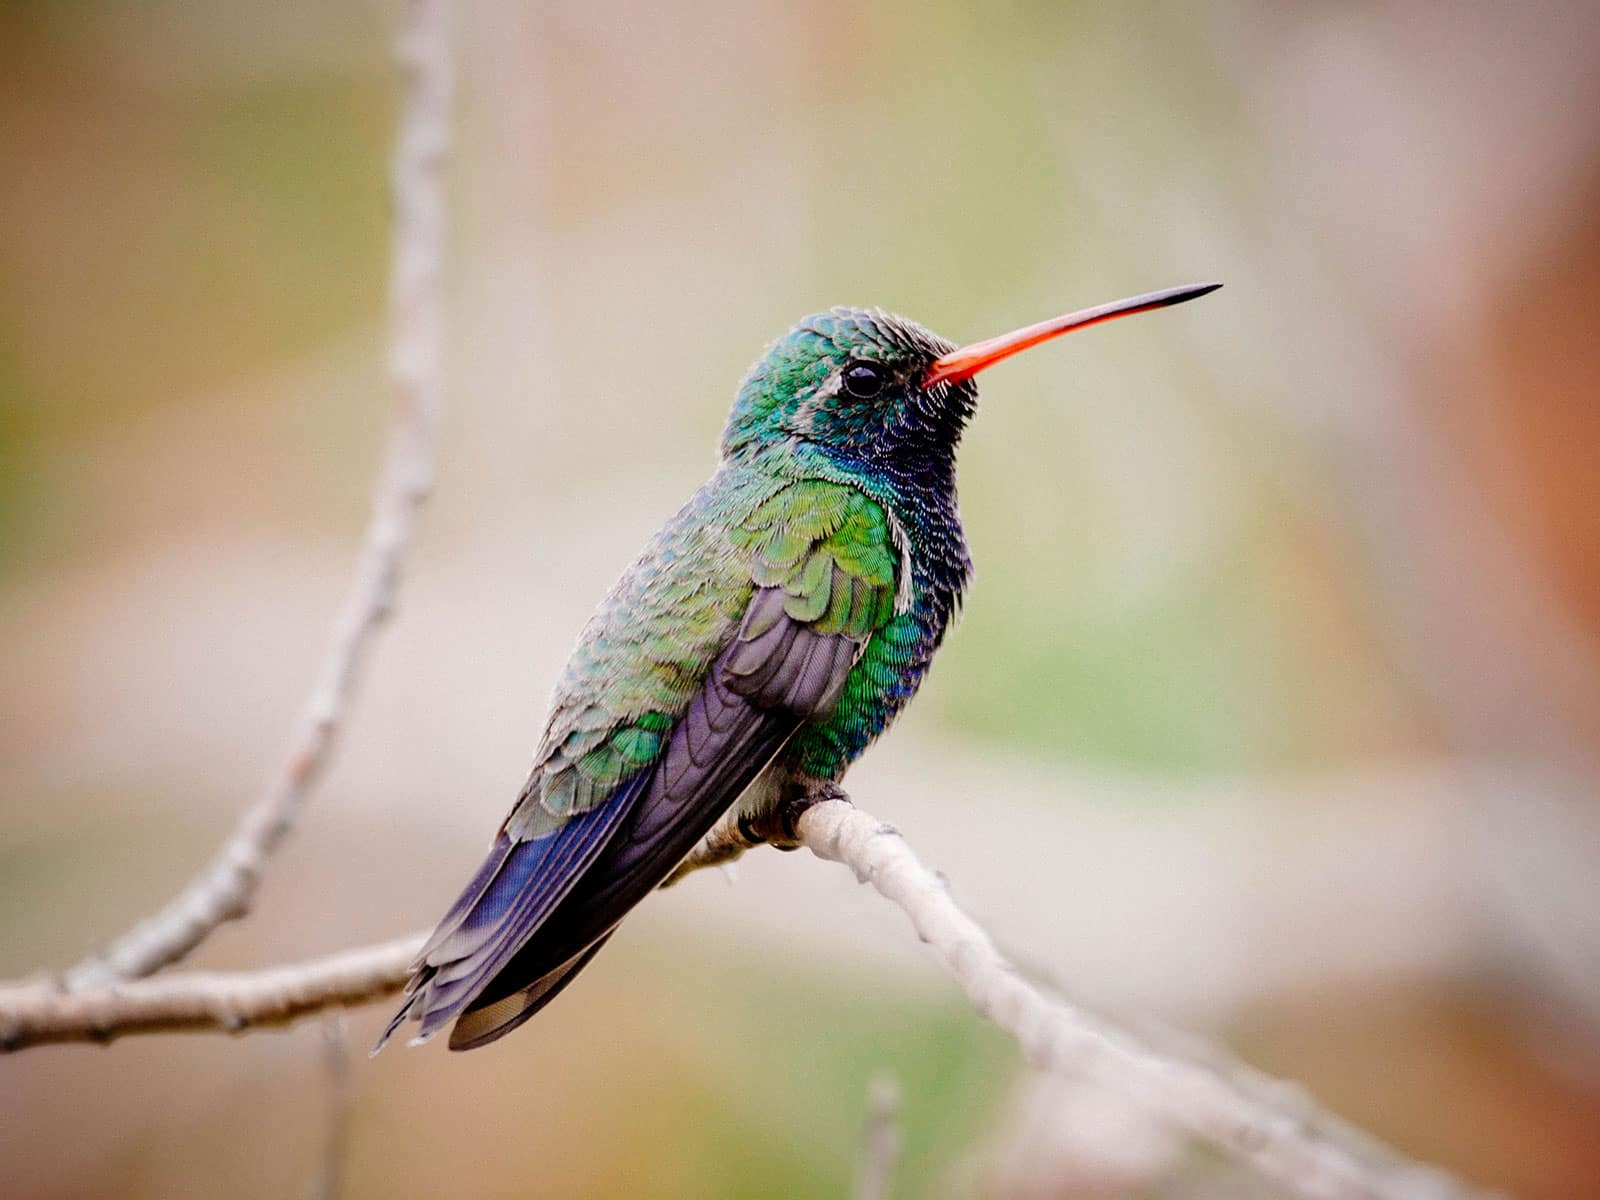 Broad-billed hummingbird sitting on a small tree branch